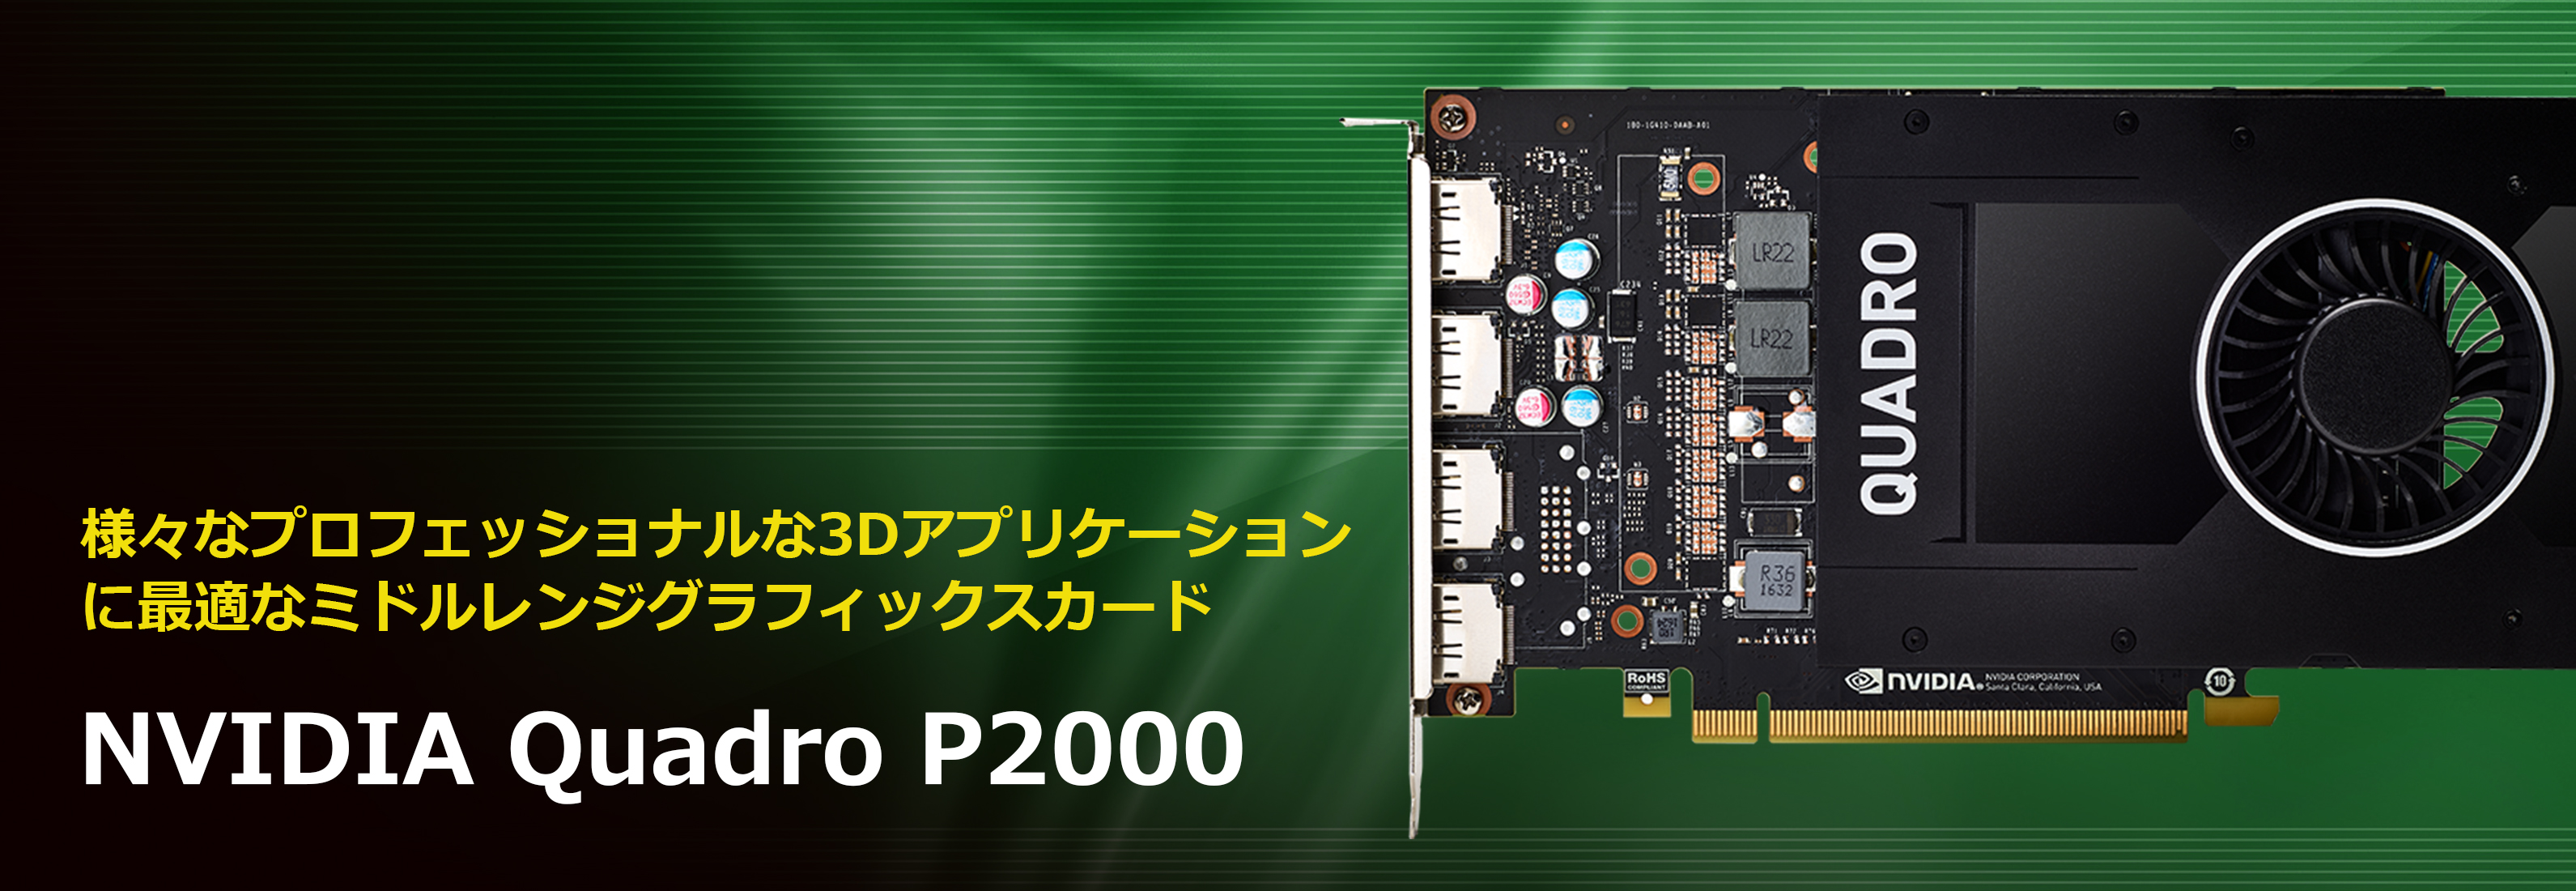 NVIDIA Quadro P2000 | 菱洋エレクトロ株式会社 - NVIDIA製品情報